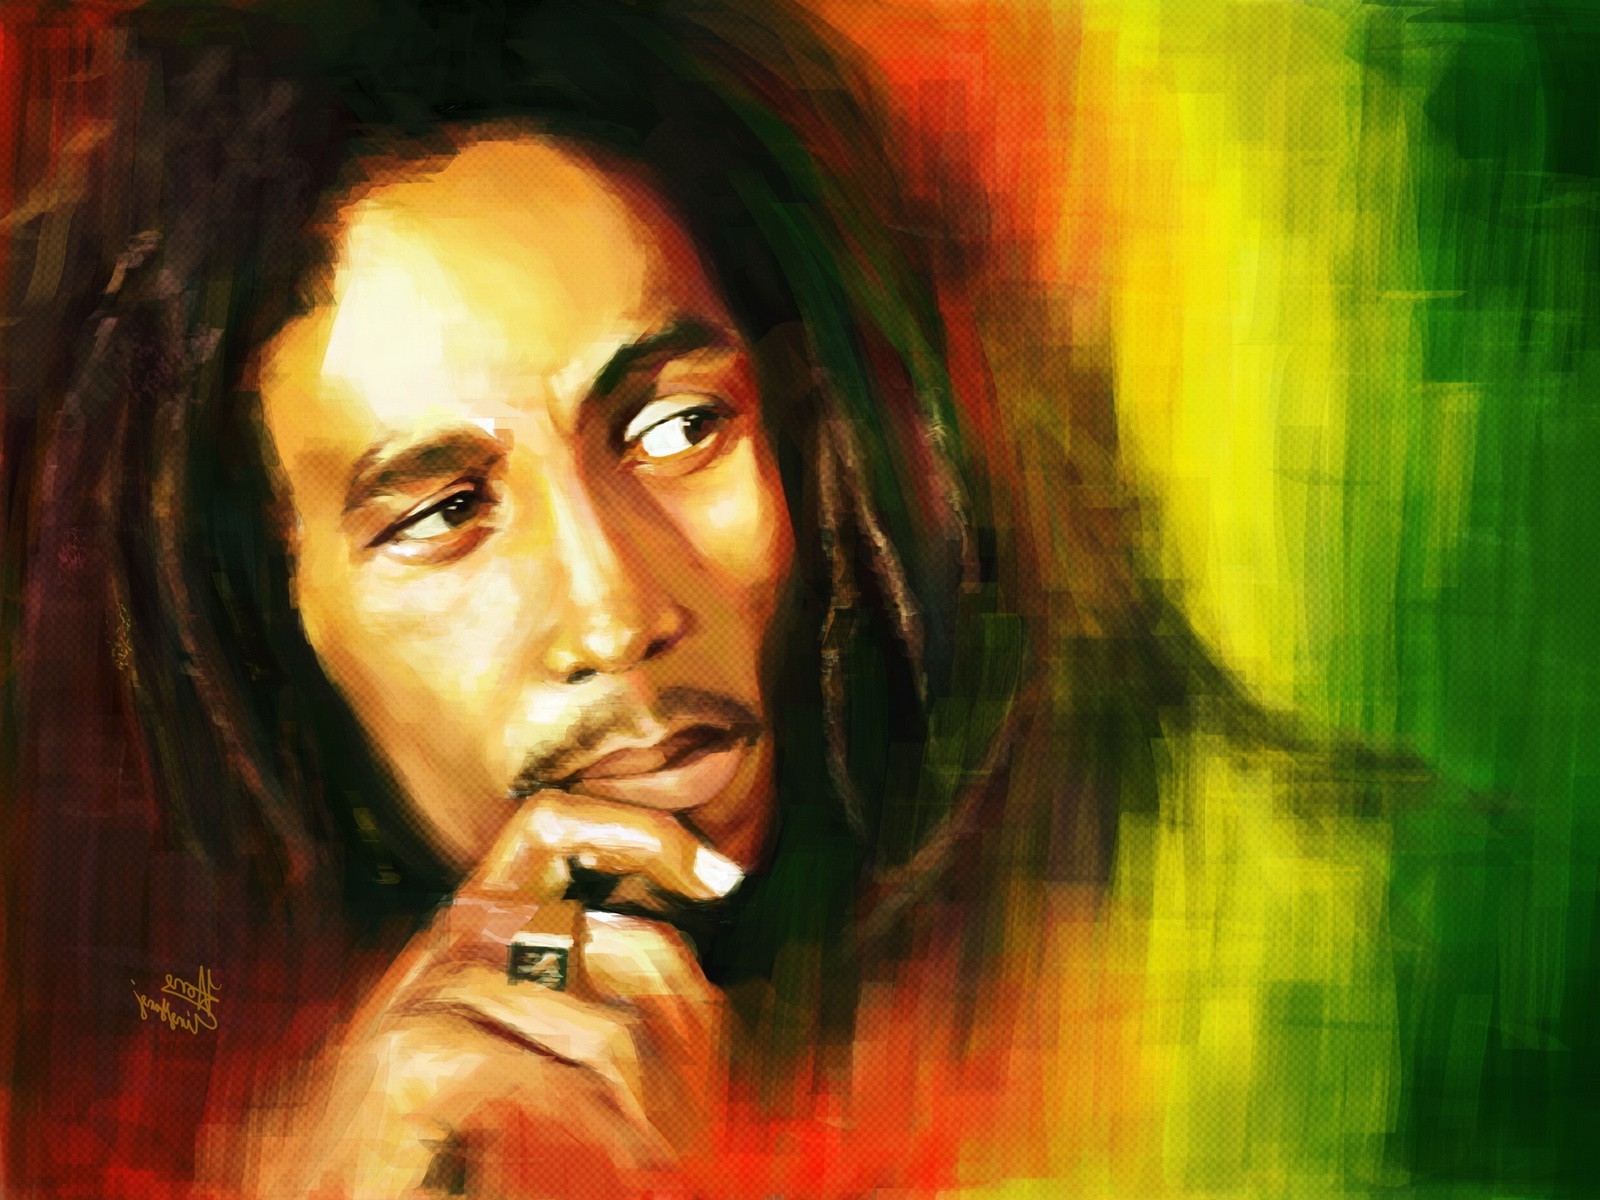 X music bob marley reggae artwork wallpaper jpg kb